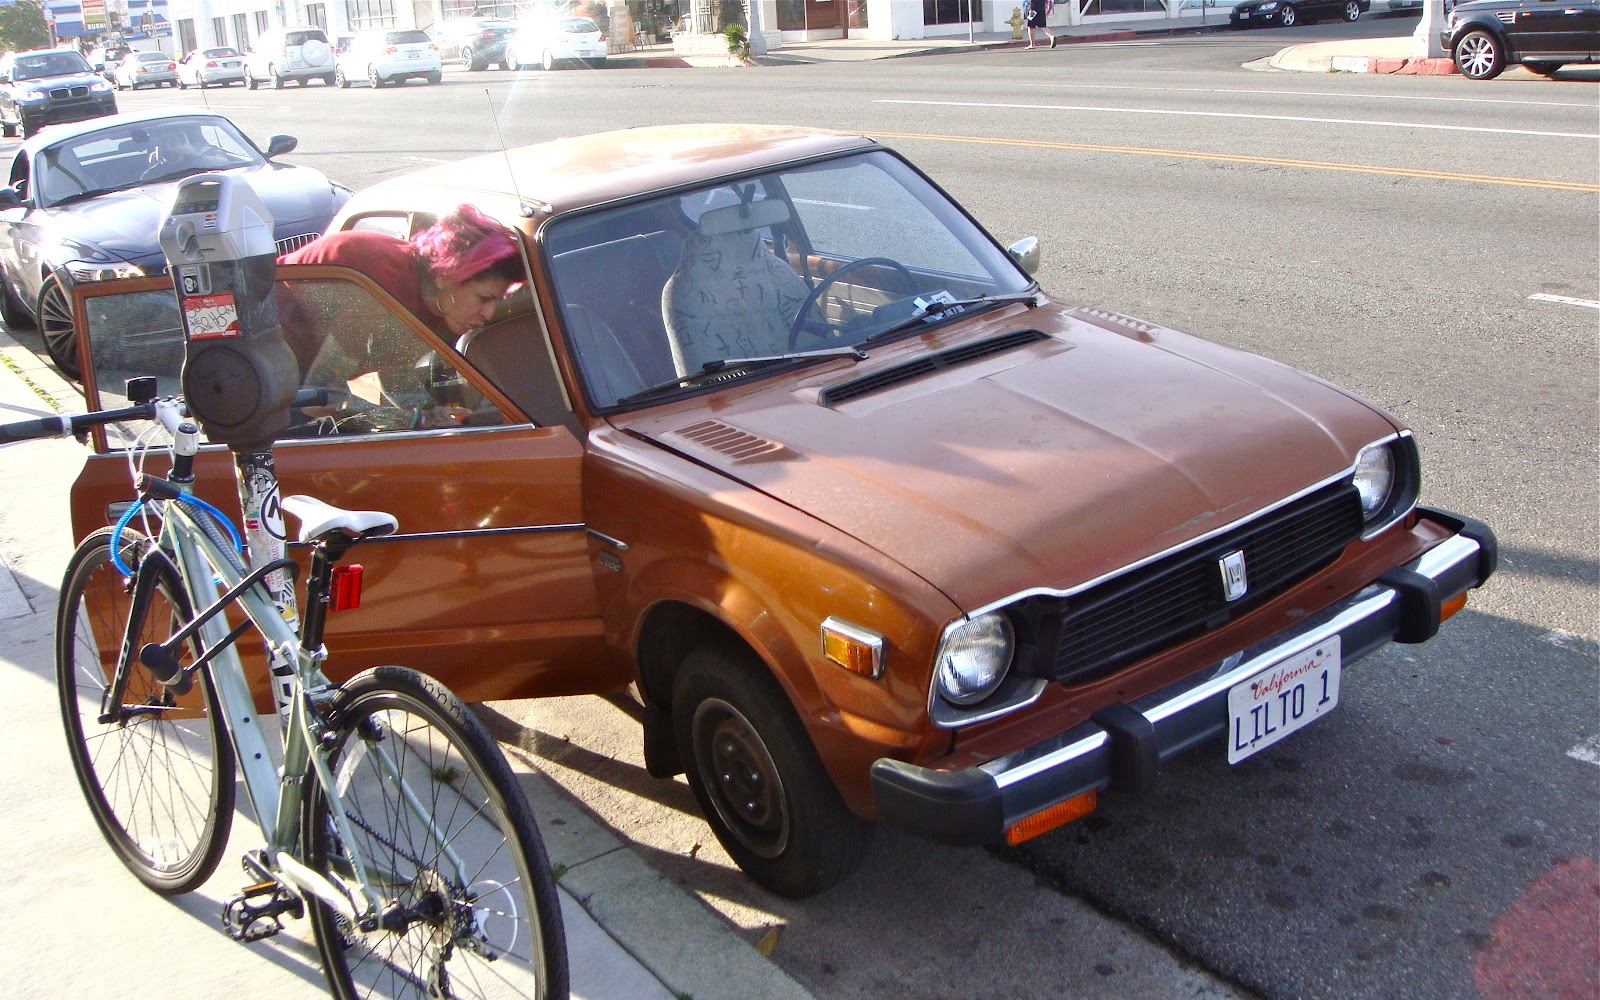 THE STREET PEEP: 1979 Honda CVCC Civic Hondamatic